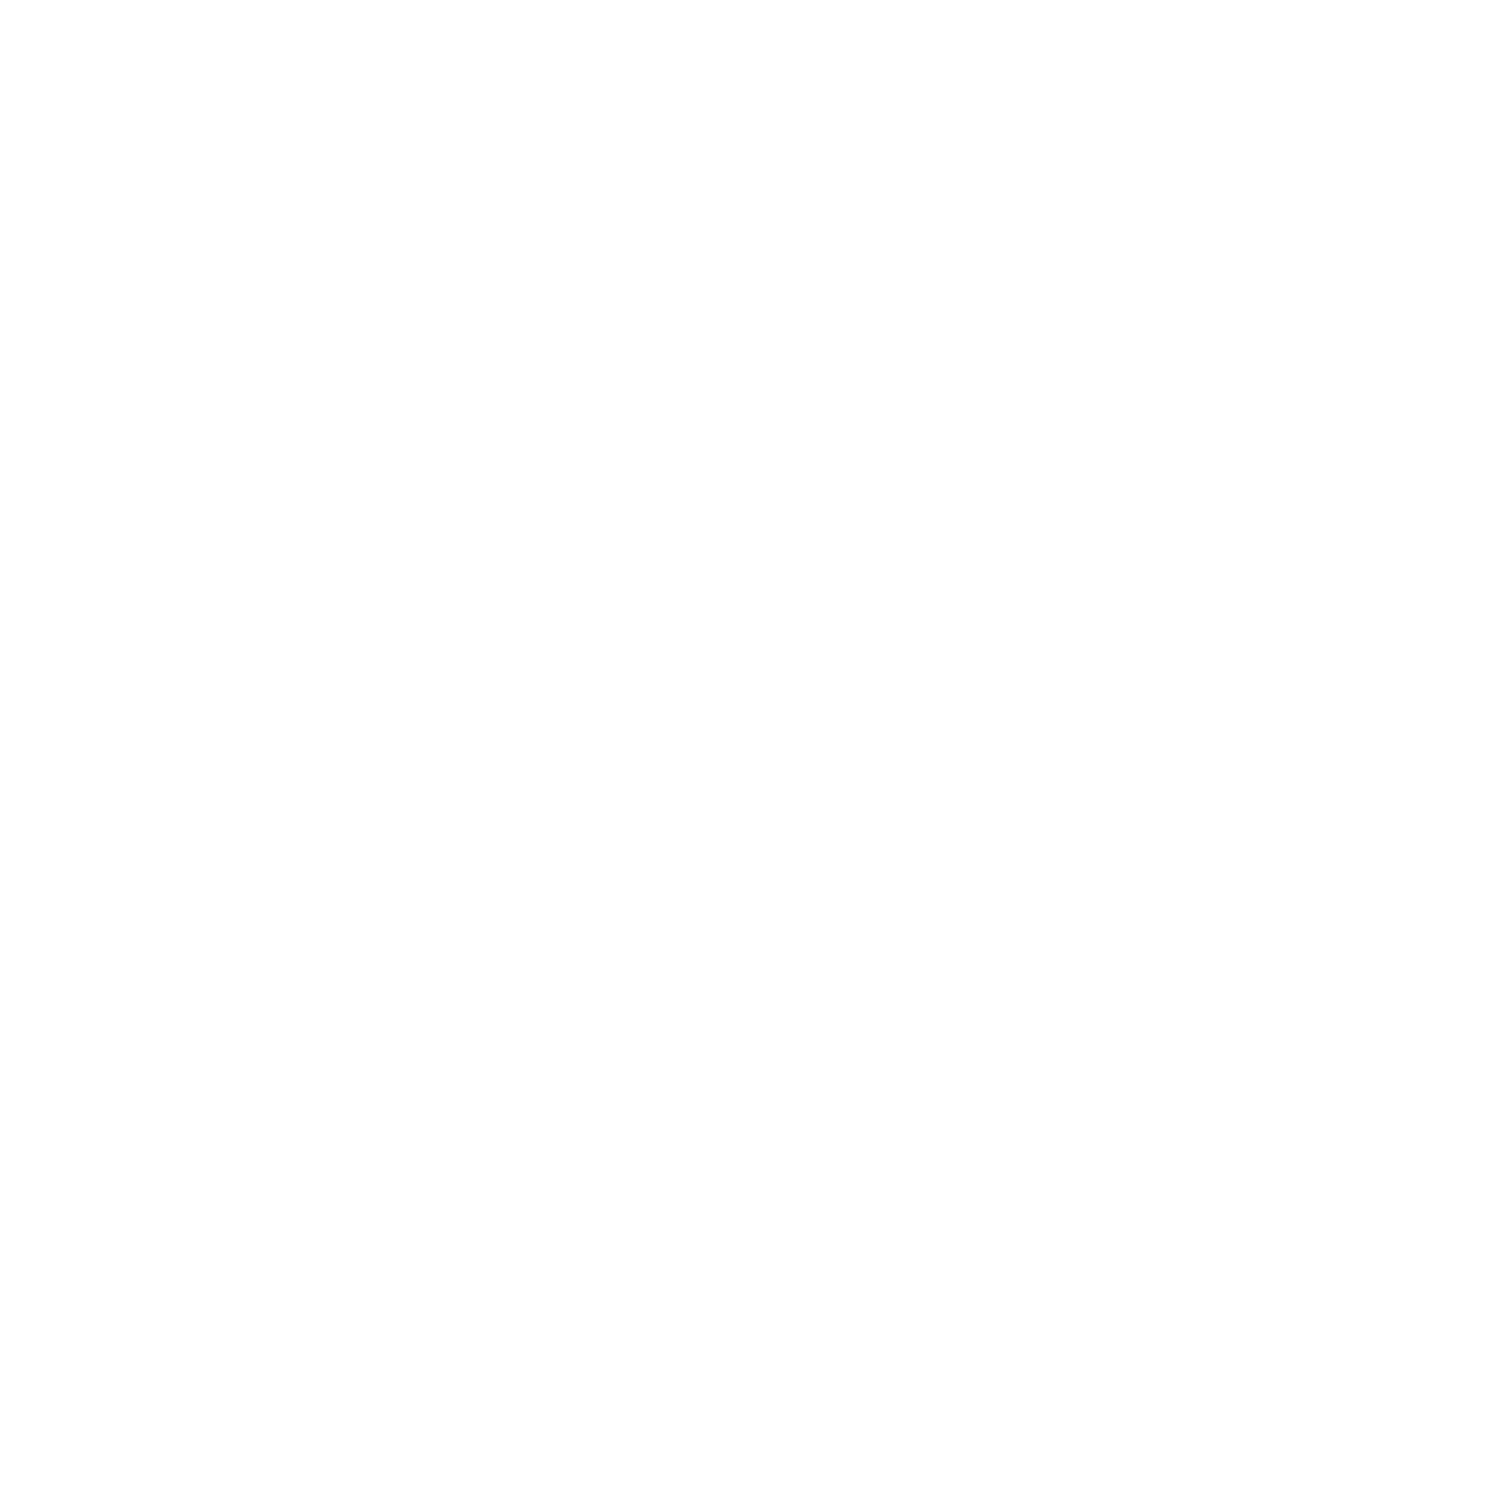 STARWOOD RANCH